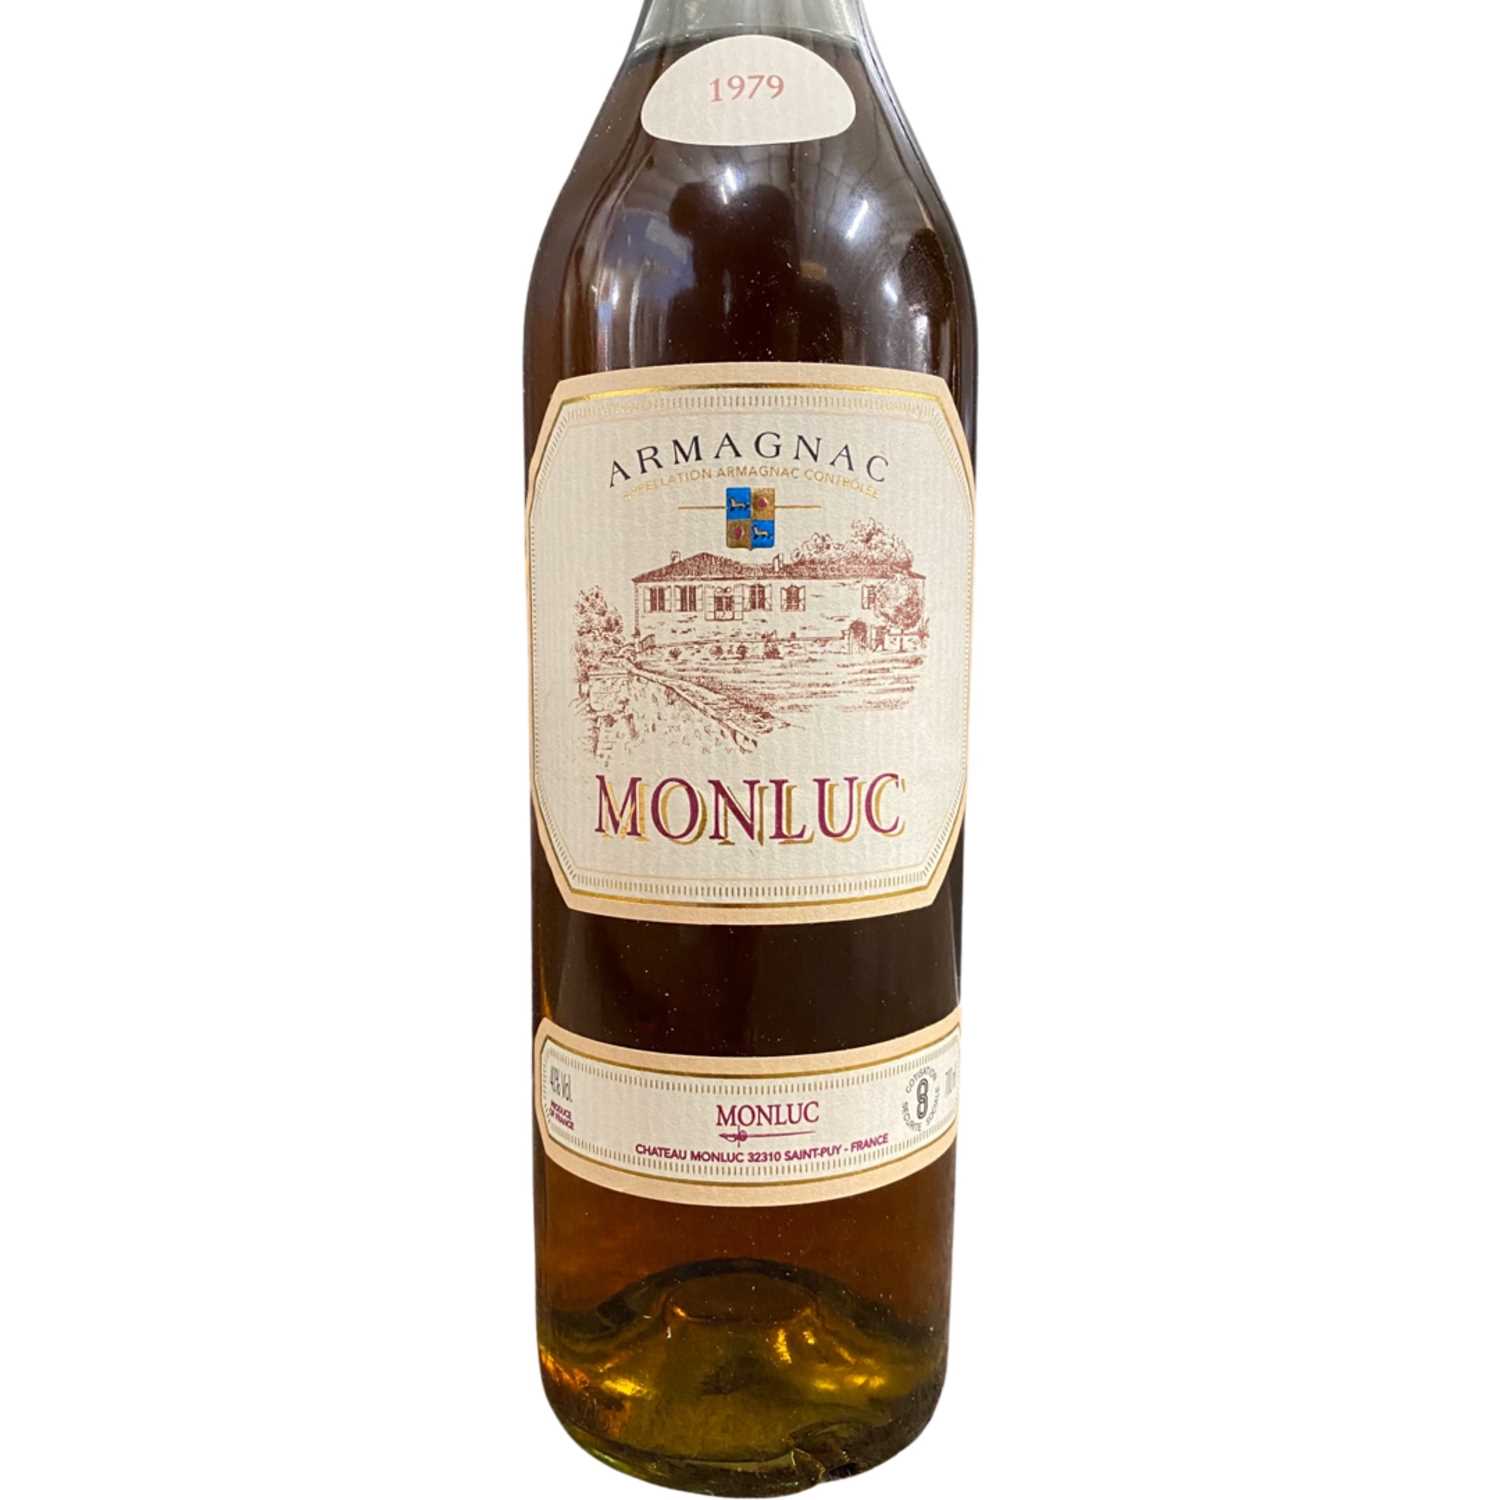 Cased Bottle of 1979 Armagnac Monluc - Image 3 of 3